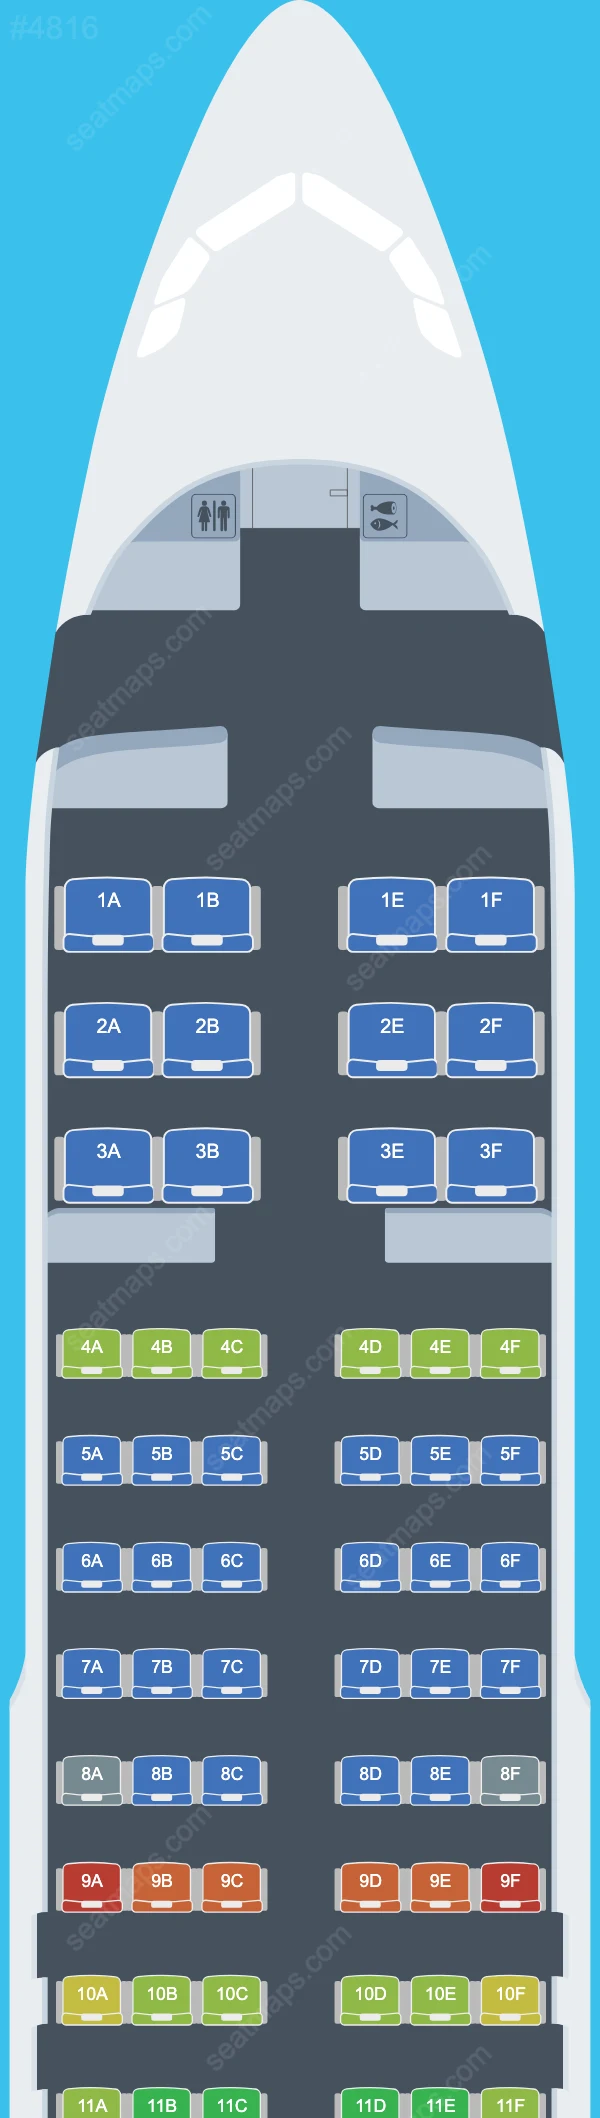 Uzbekistan Airways Airbus A320 Seat Maps A320-200 V.1